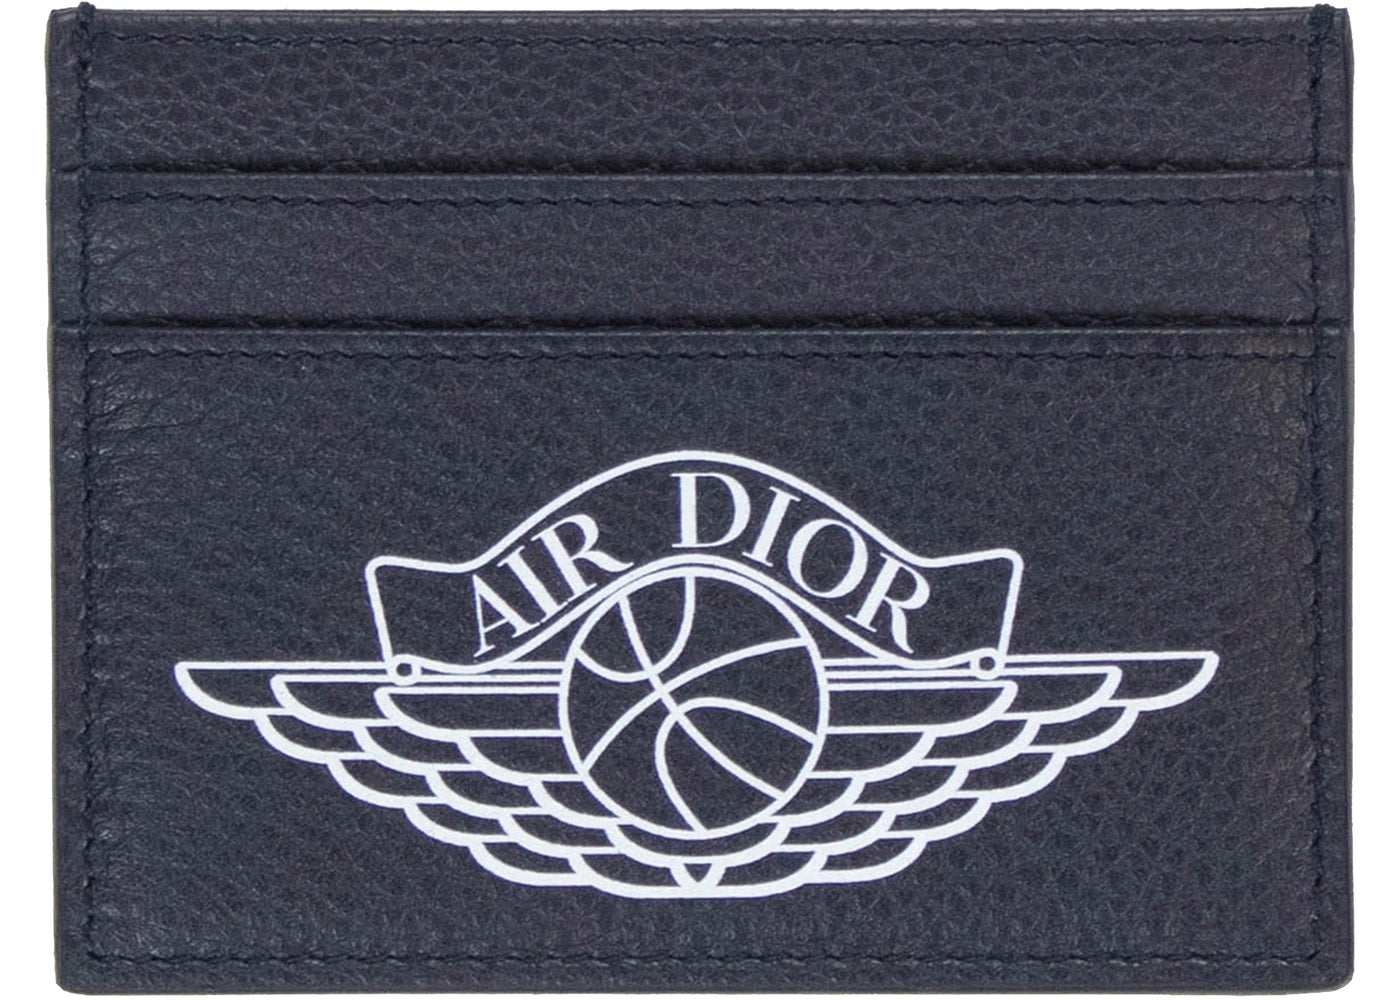 Dior-x-Jordan-Wings-Card-Holder-4-Card-Slot-Navy